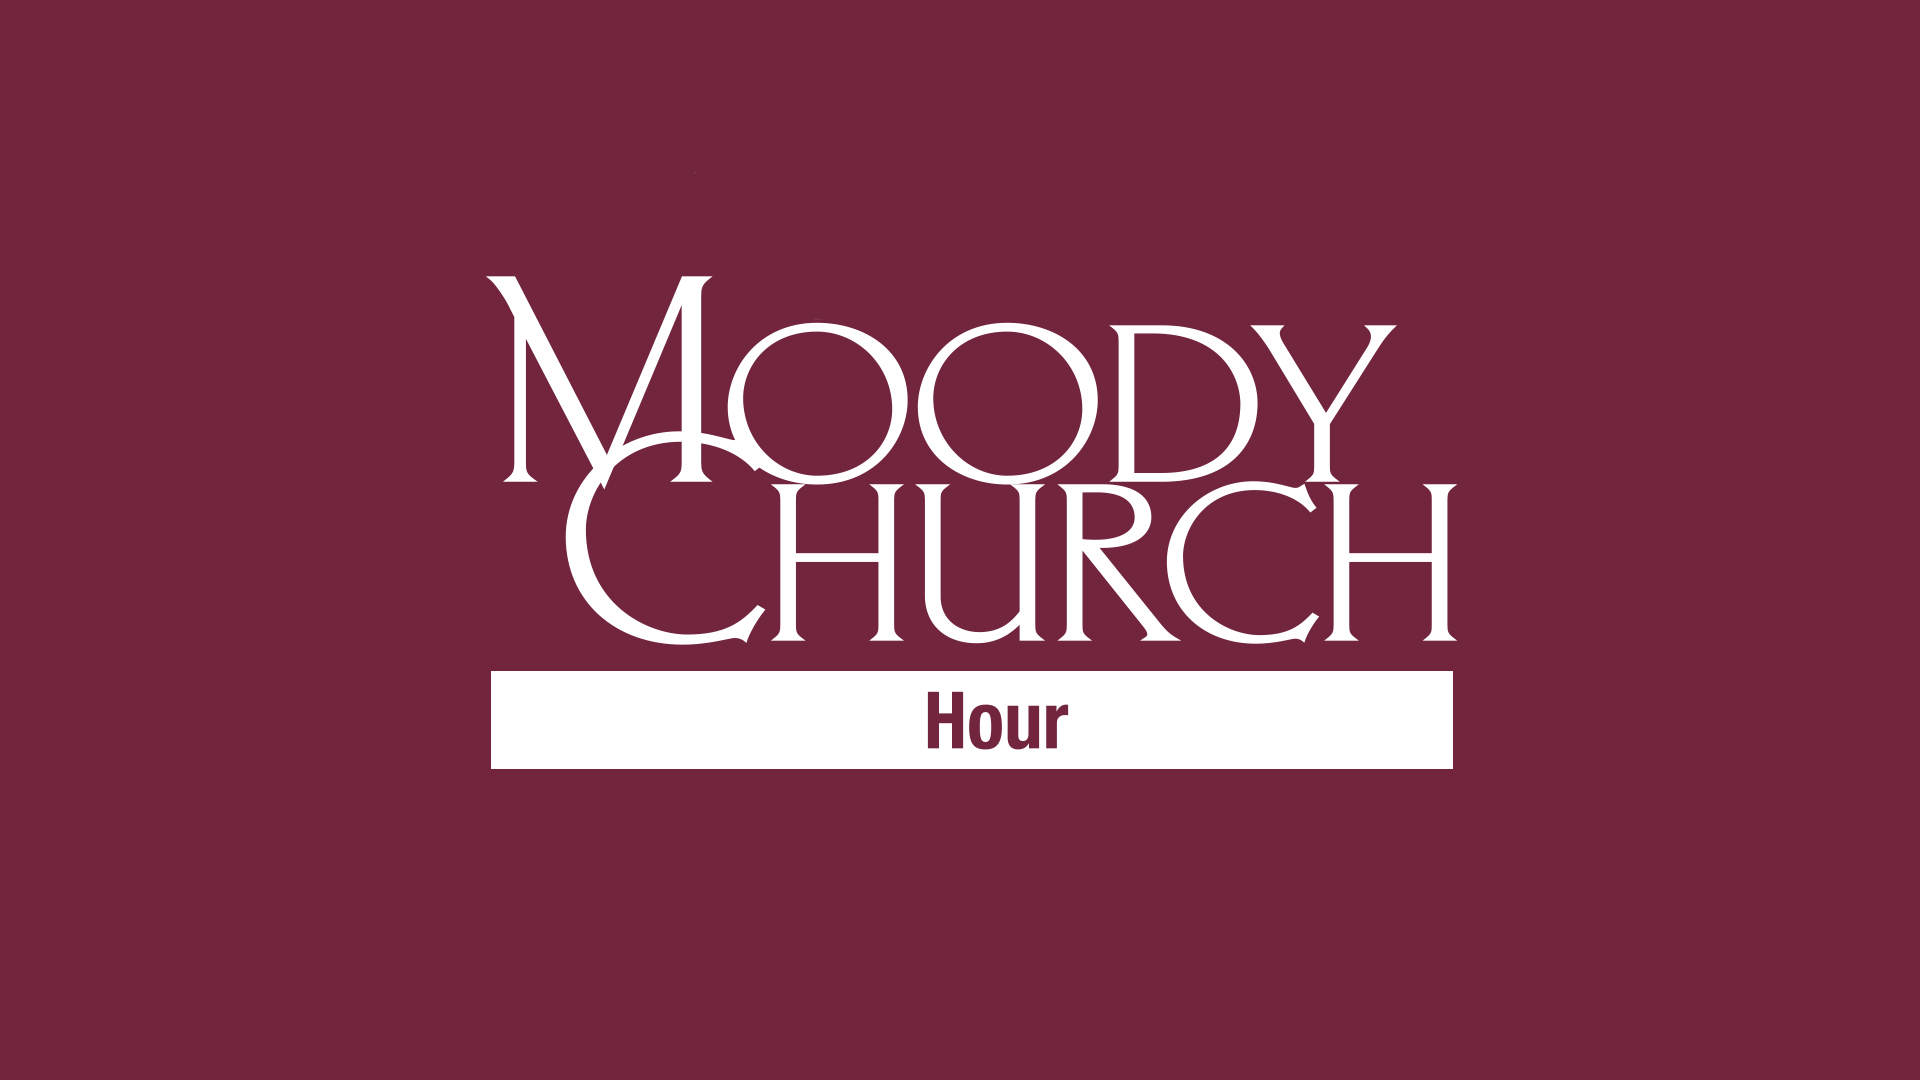 Moody Church Hour radio program